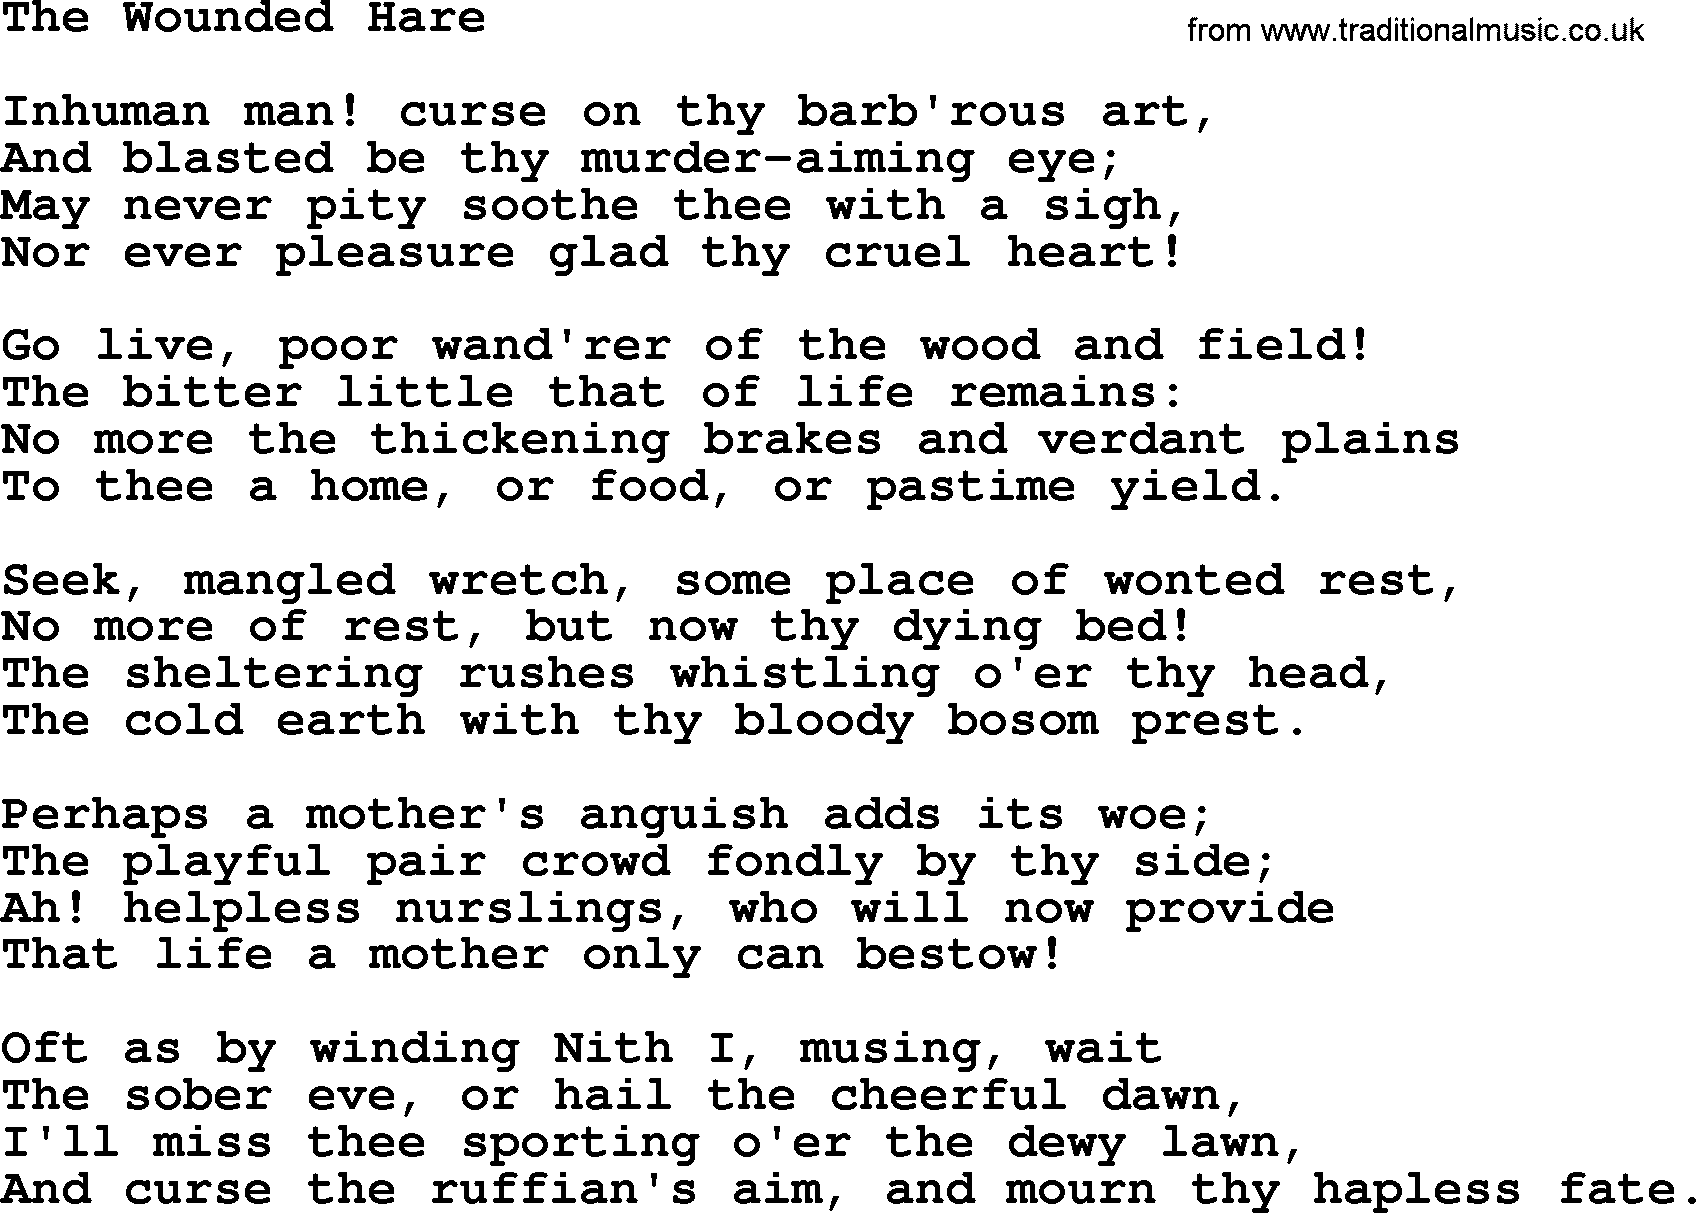 Robert Burns Songs & Lyrics: The Wounded Hare